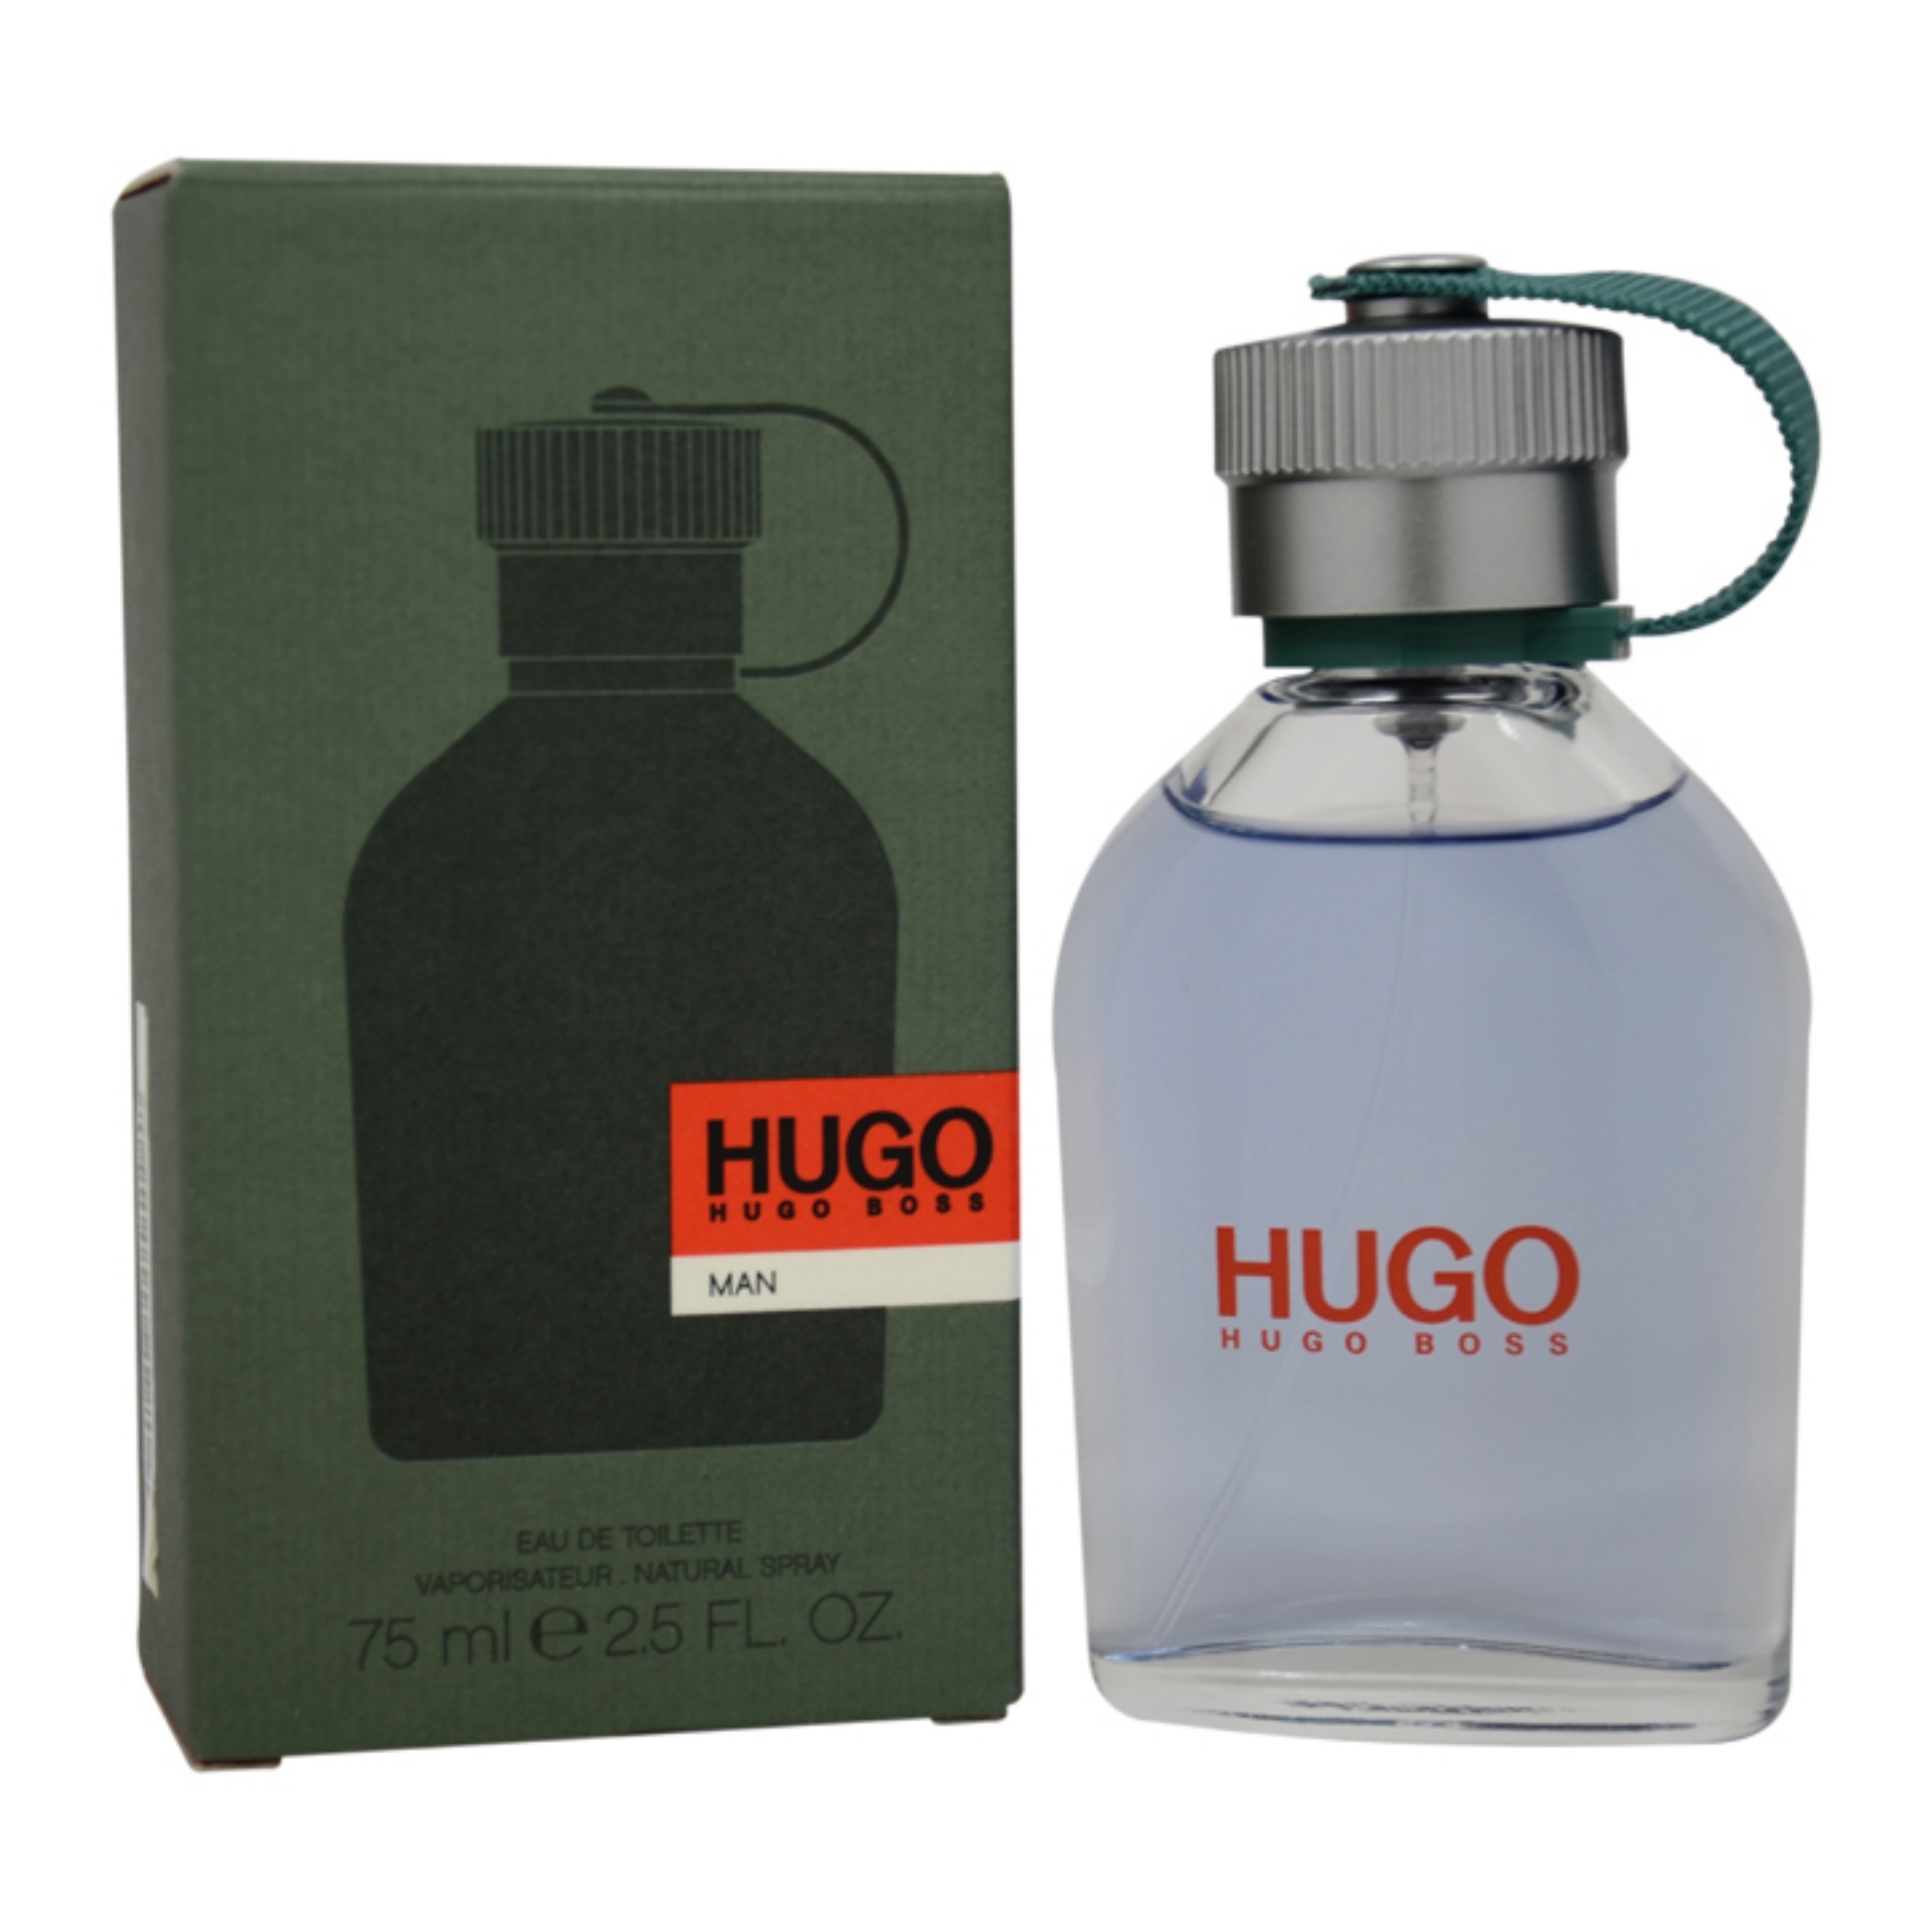 Ml hugo. Hugo Boss 75ml. Hugo Boss мужские. Хьюго босс Хьюго мен. Hugo Boss Hugo man extreme.